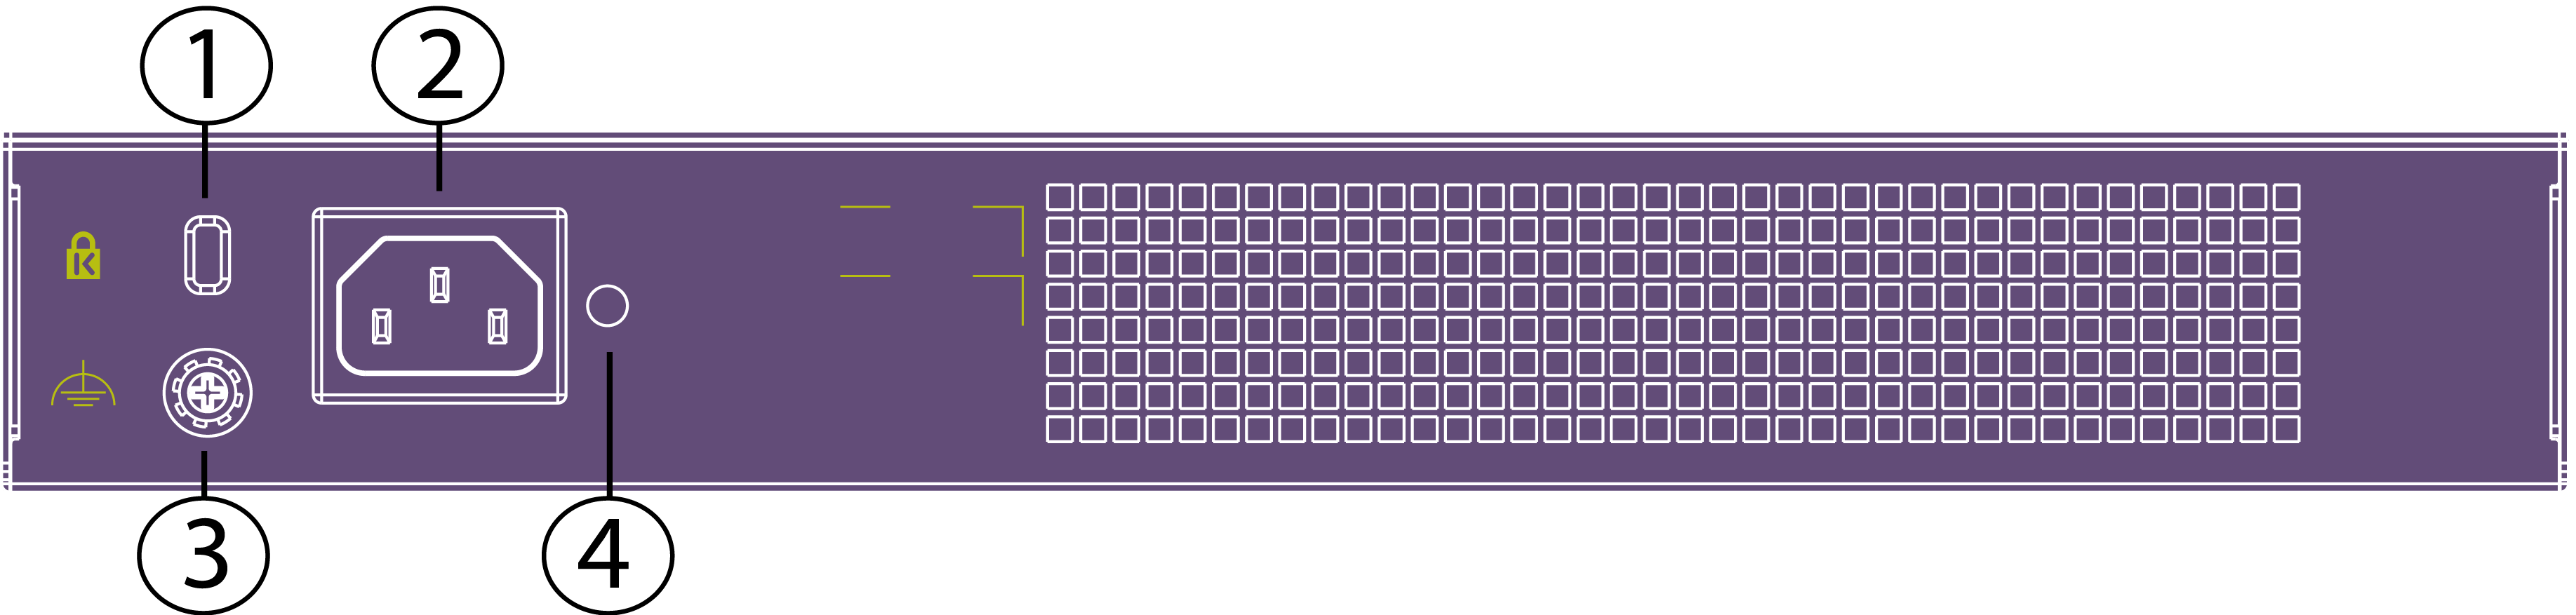 5320-16P-4XE Rear Panel